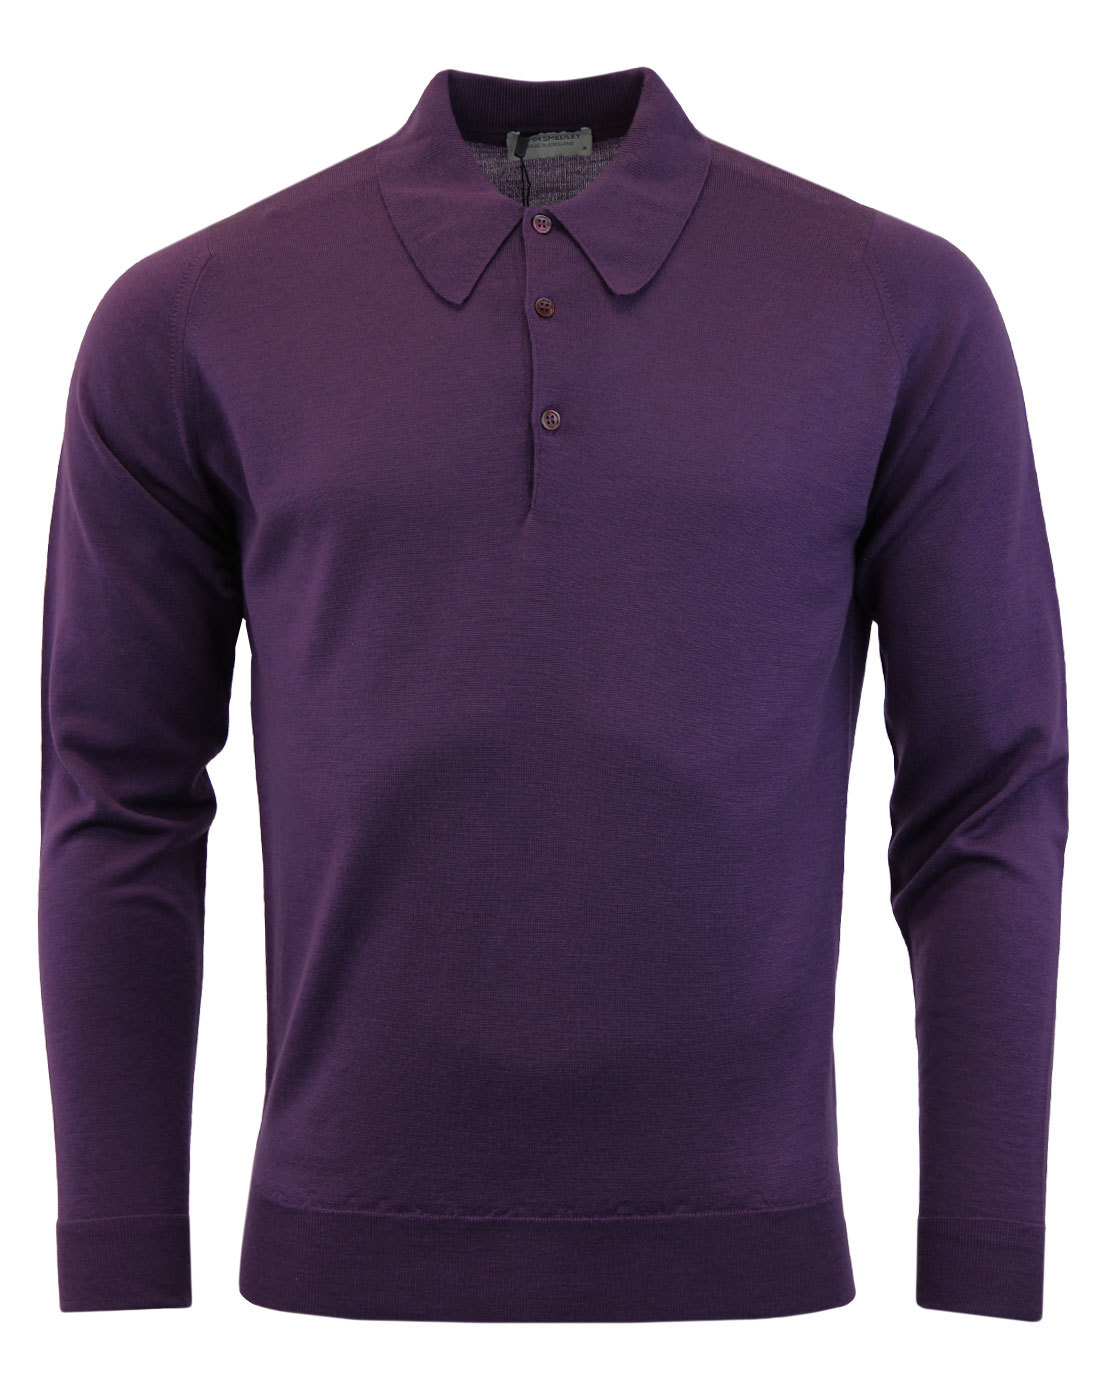 JOHN SMEDLEY Dorset Retro 60s Mod Knitted Polo in Purple